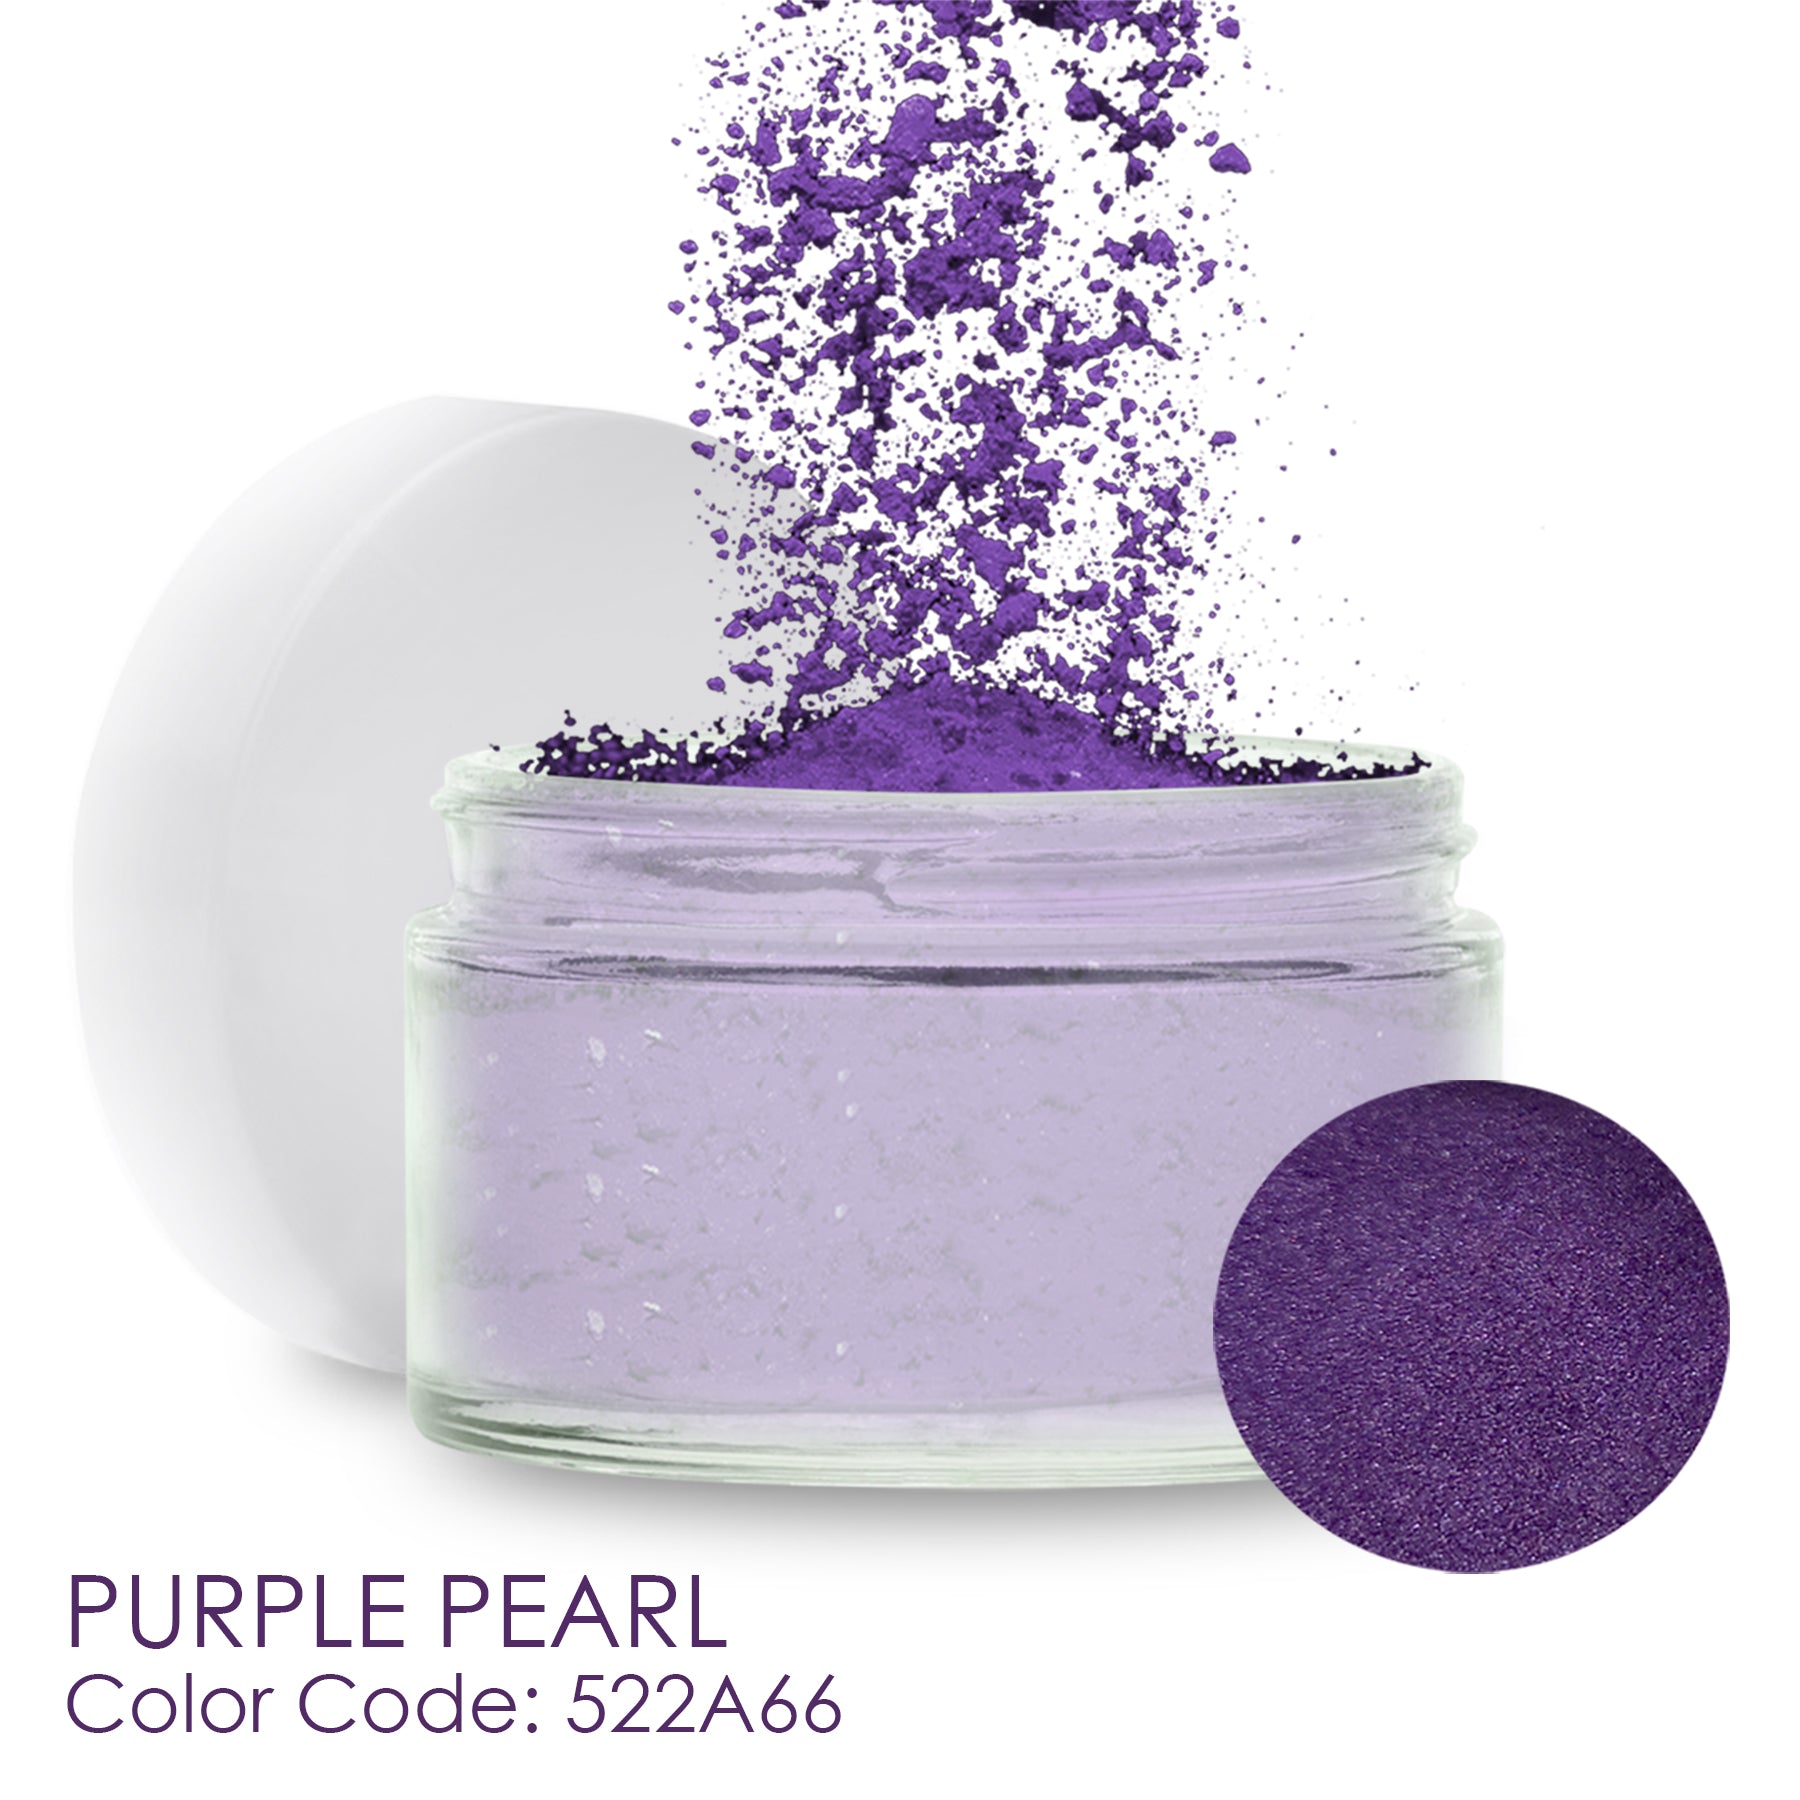 Pearl Pigment Powder, Mica Powder, Purple Pearl